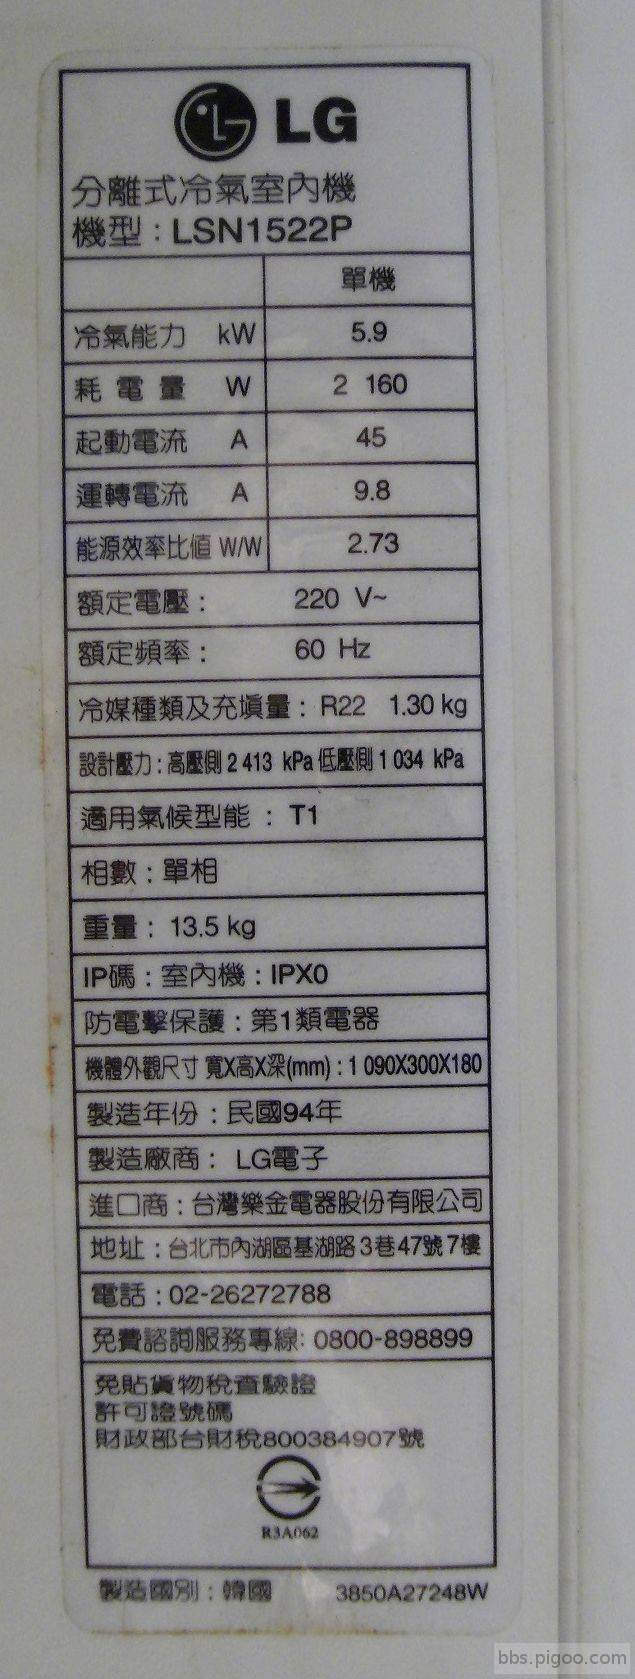 9711-LG分離式冷氣室內機LSN1522P銘版.jpg